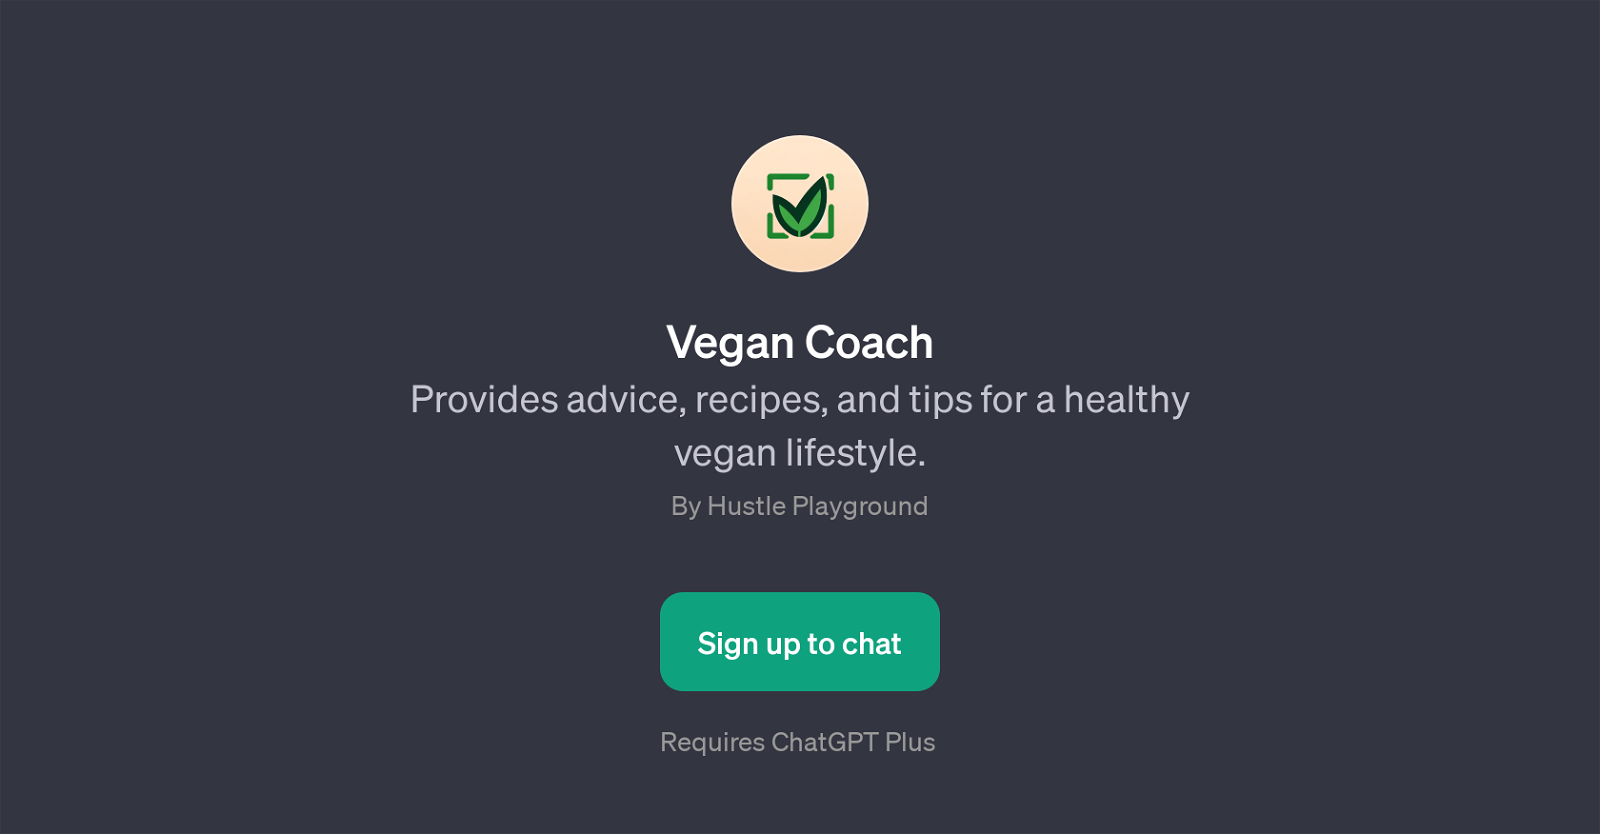 Vegan Coach website